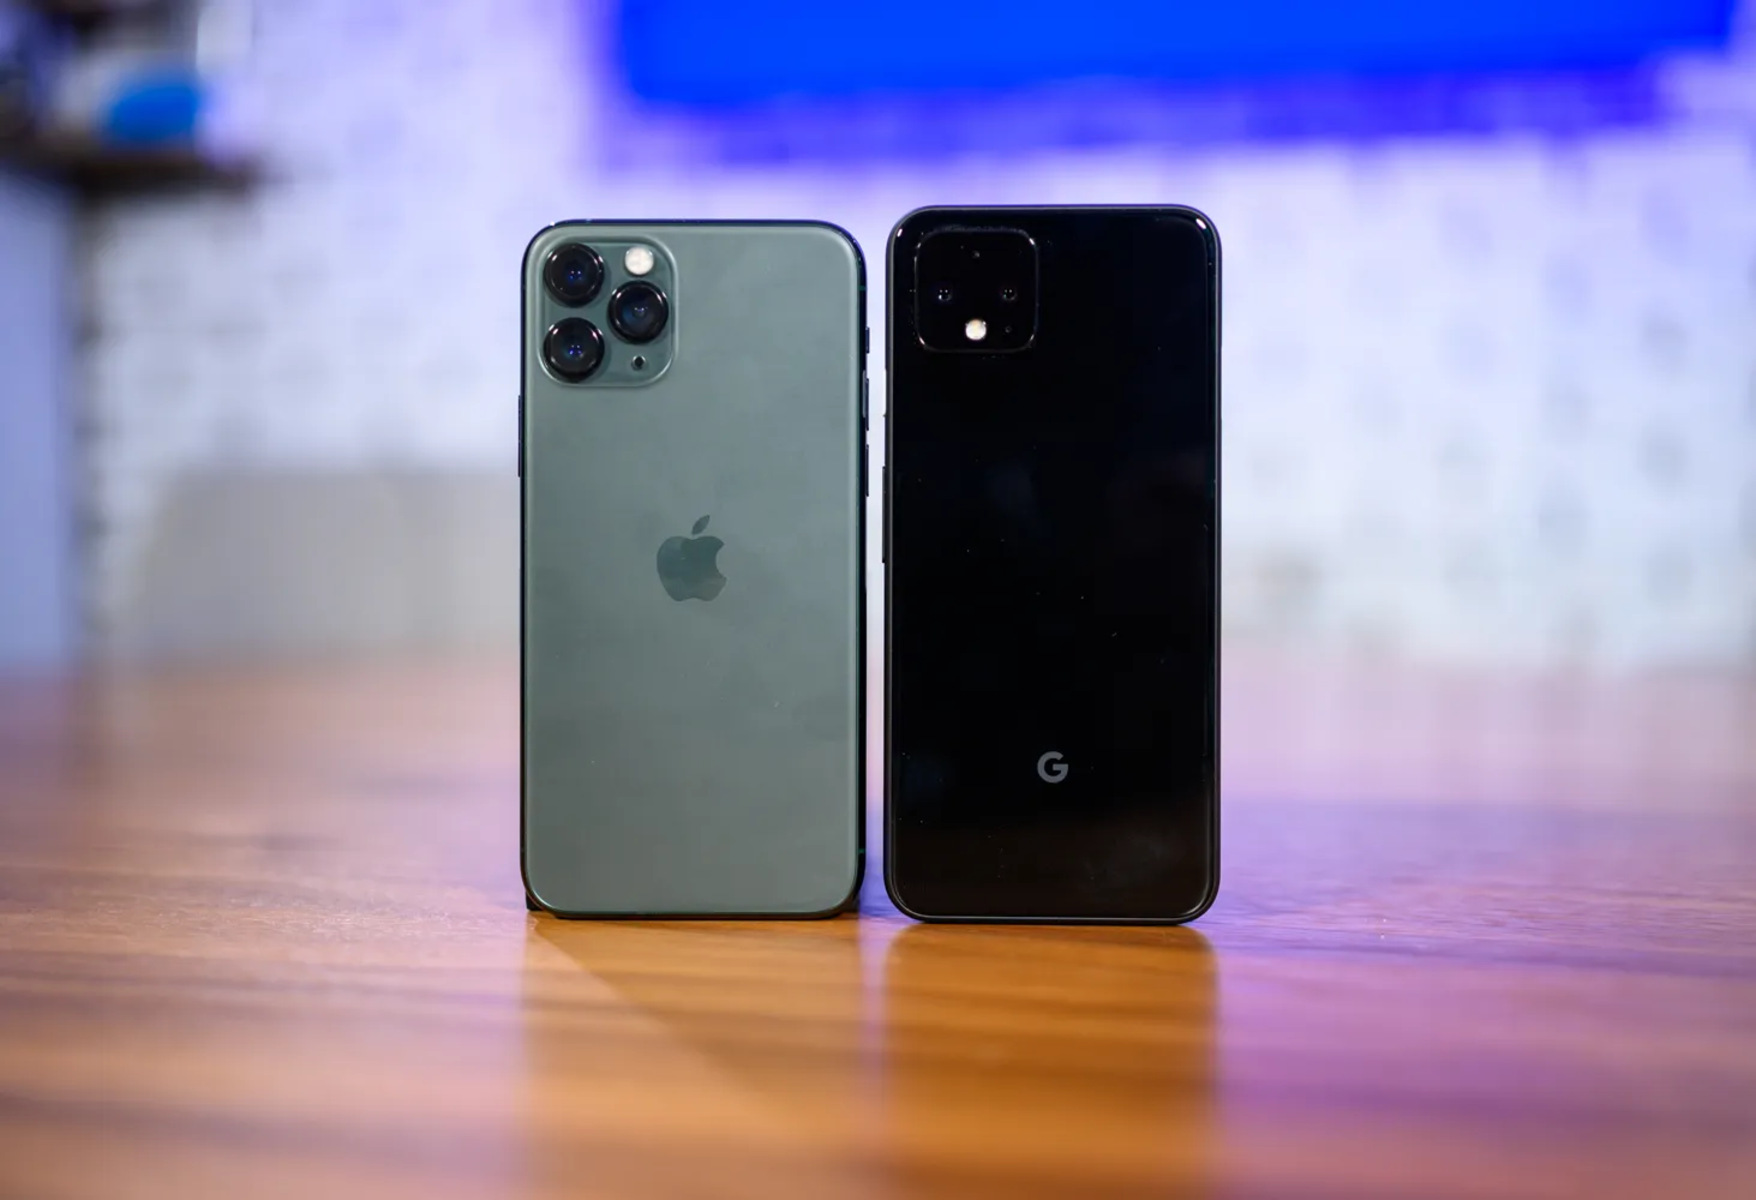 pixel-4-vs-iphone-11-choosing-the-ideal-smartphone